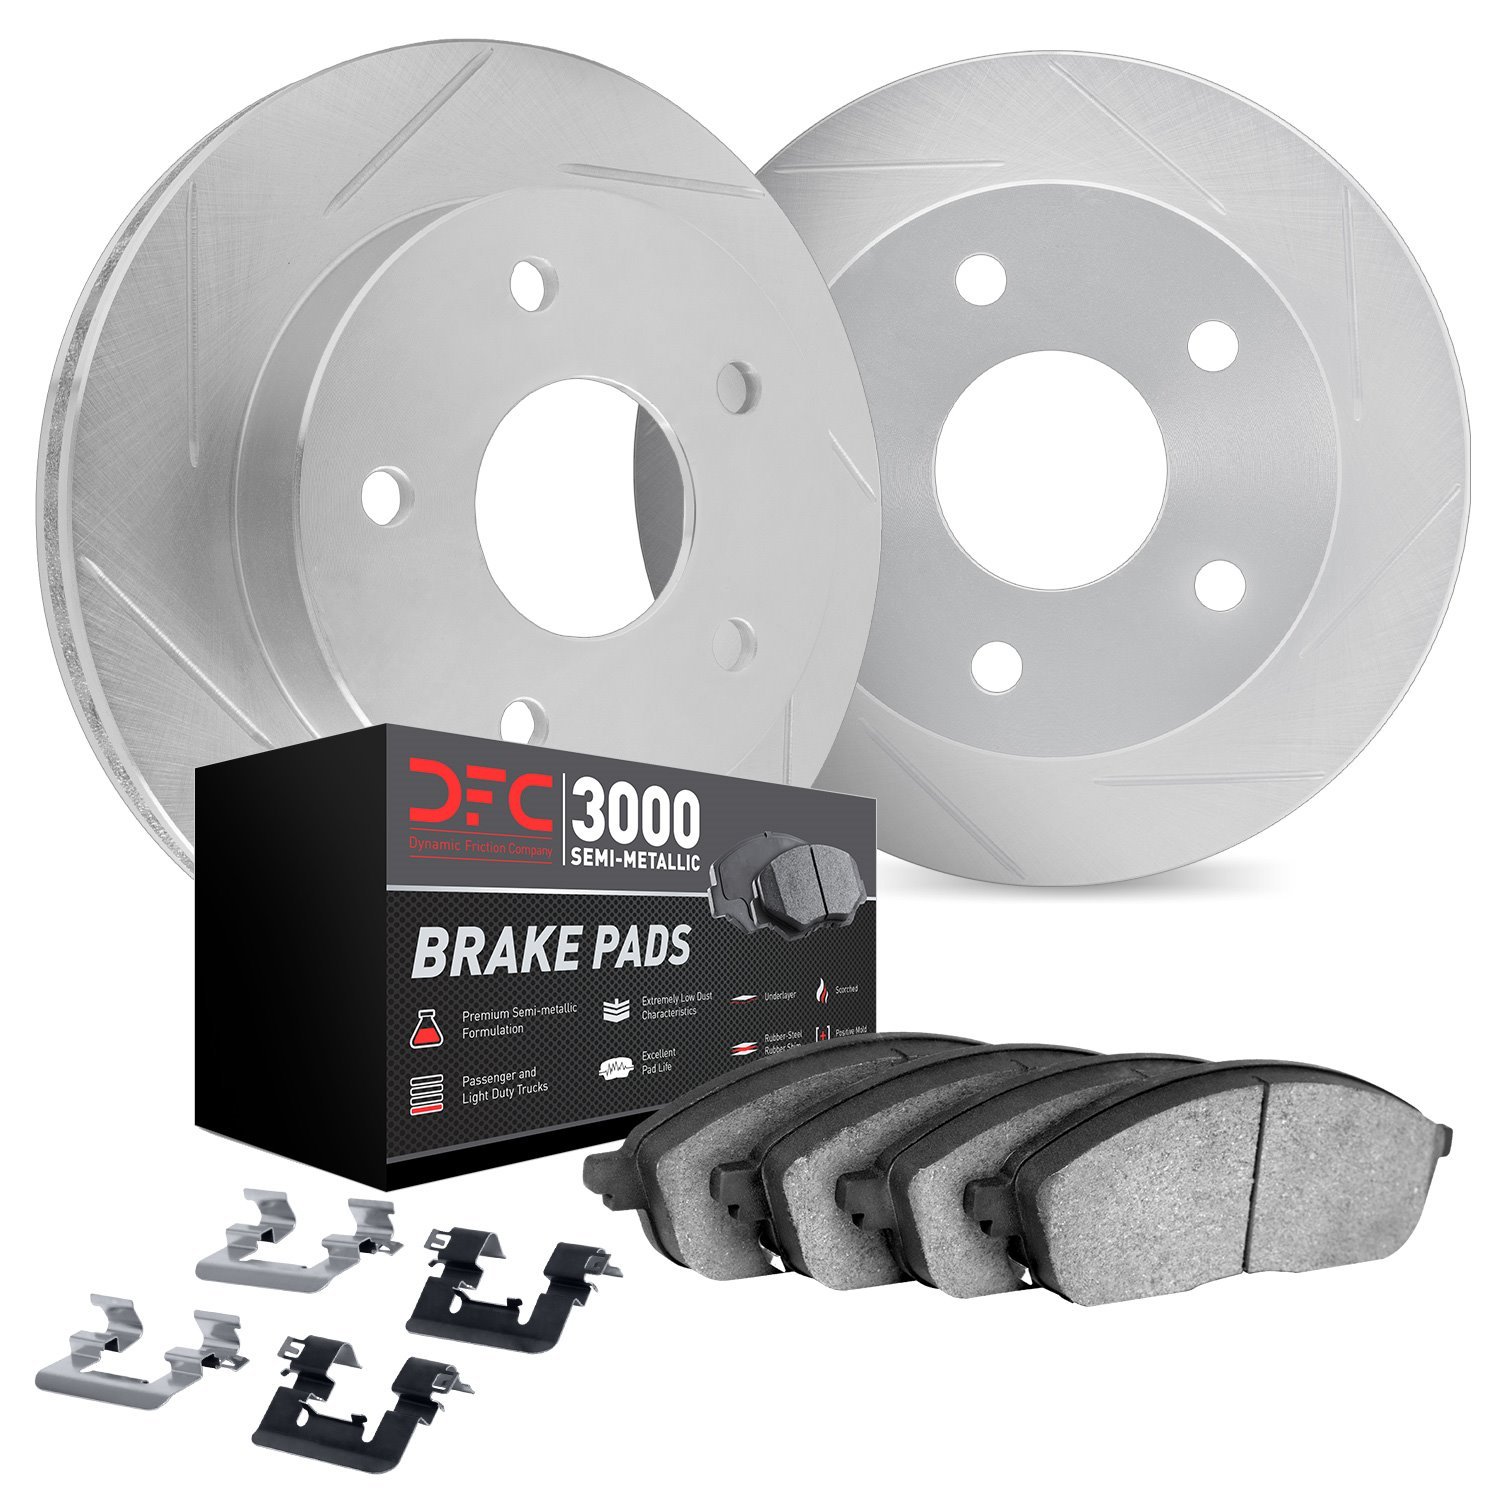 5112-59068 Slotted Brake Rotors with 3000-Series Semi-Metallic Brake Pads Kit & Hardware [Silver], 2012-2016 Acura/Honda, Positi